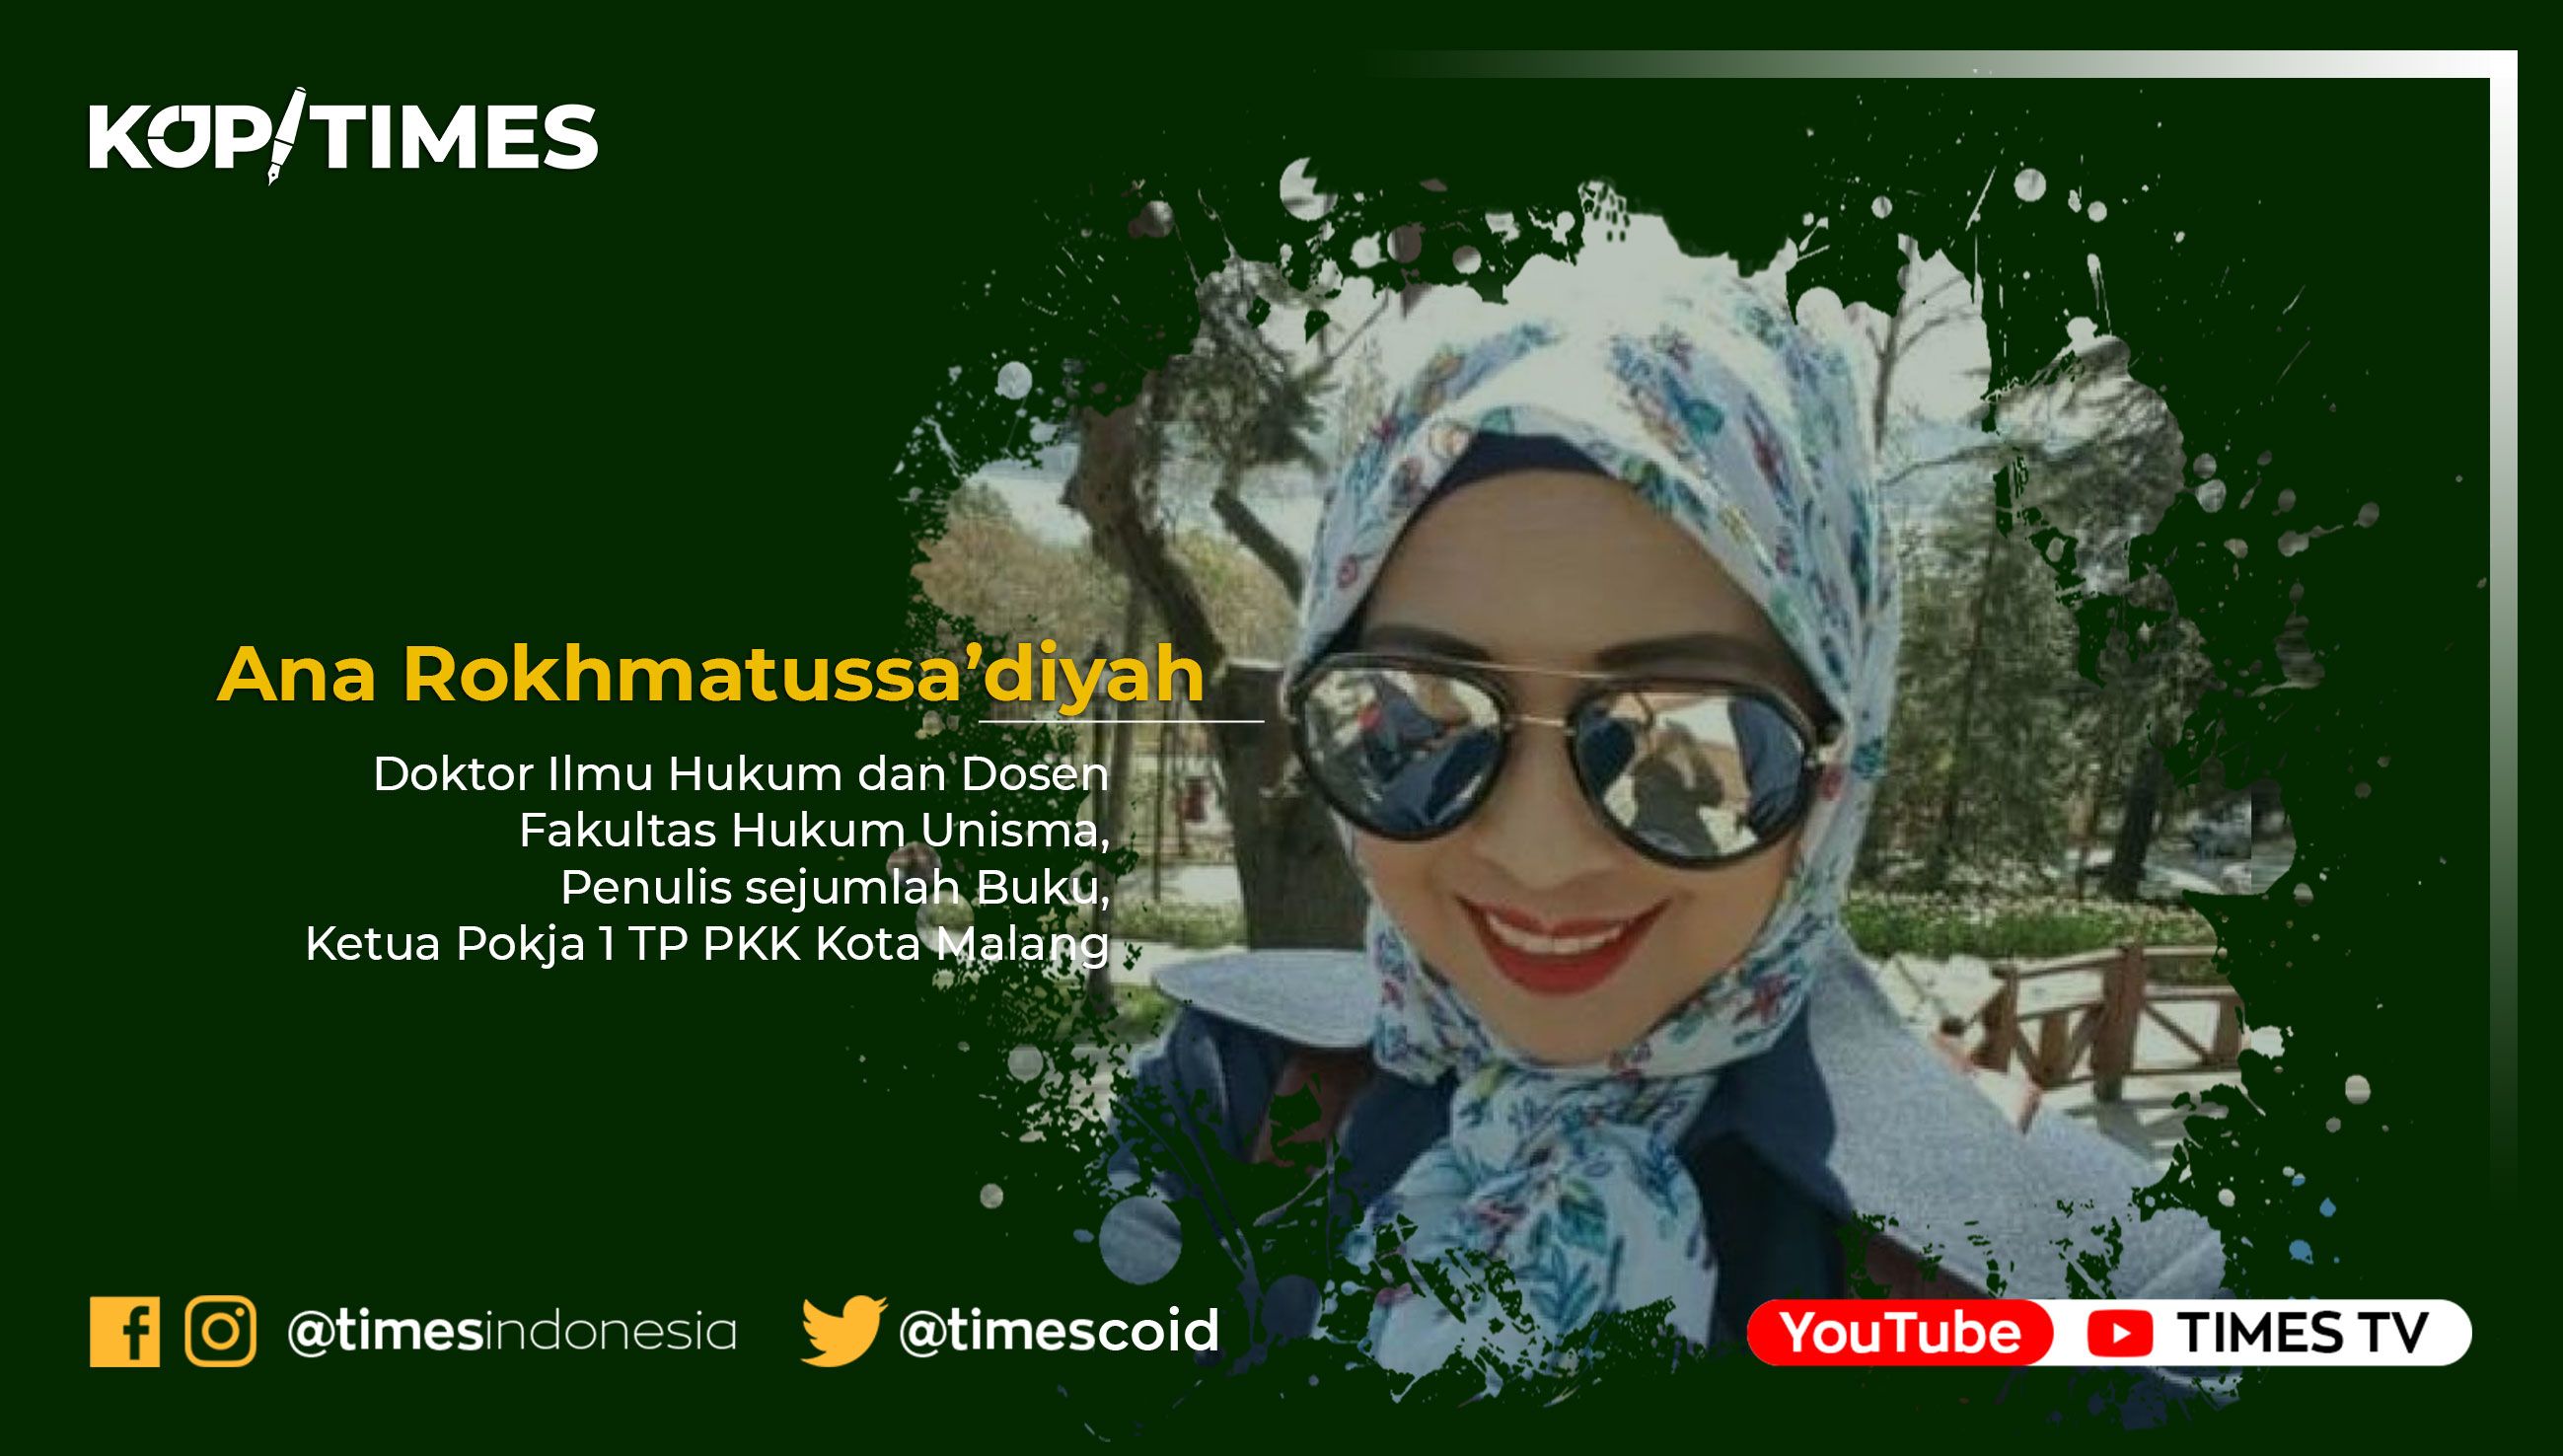 Ana Rokhmatussa’diyah, Doktor Ilmu Hukum dan Dosen Fakultas Hukum Unisma, Penulis sejumlah Buku, Ketua Pokja 1 TP PKK Kota Malang